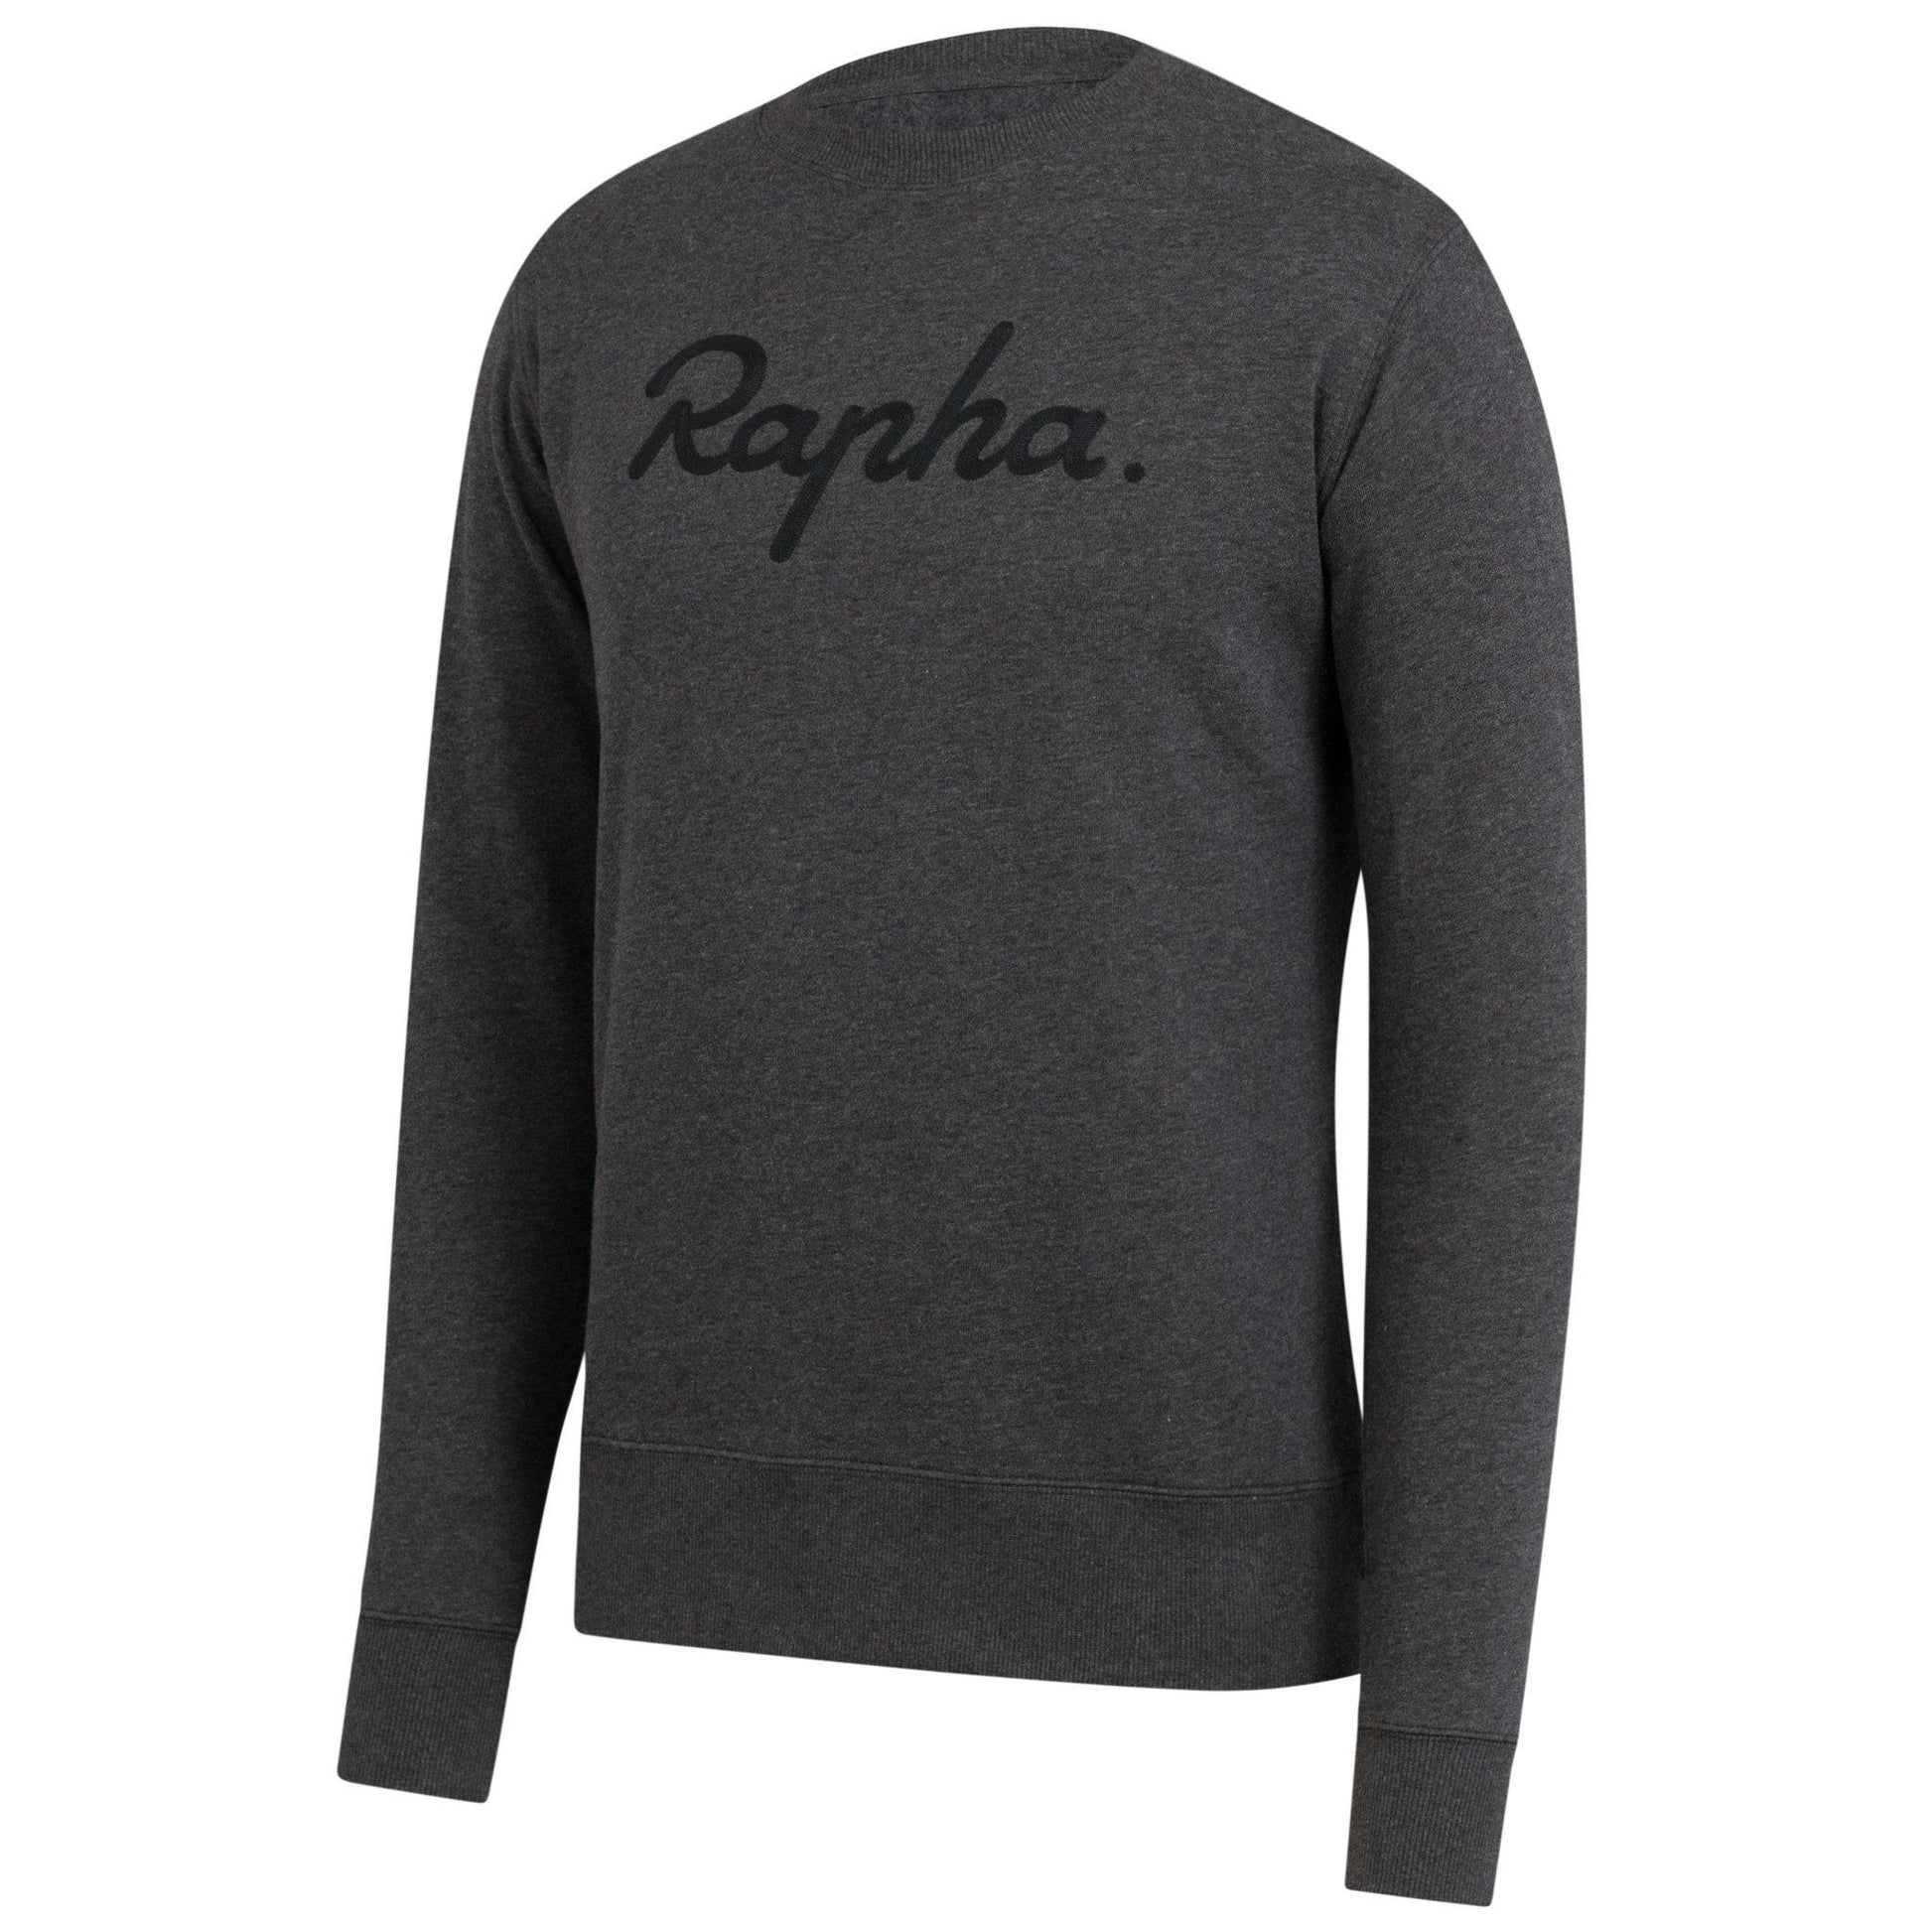 Rapha Mens Logo Sweatshirt - Charcoal Marl/Black buy online at Woolys Wheels Sydney